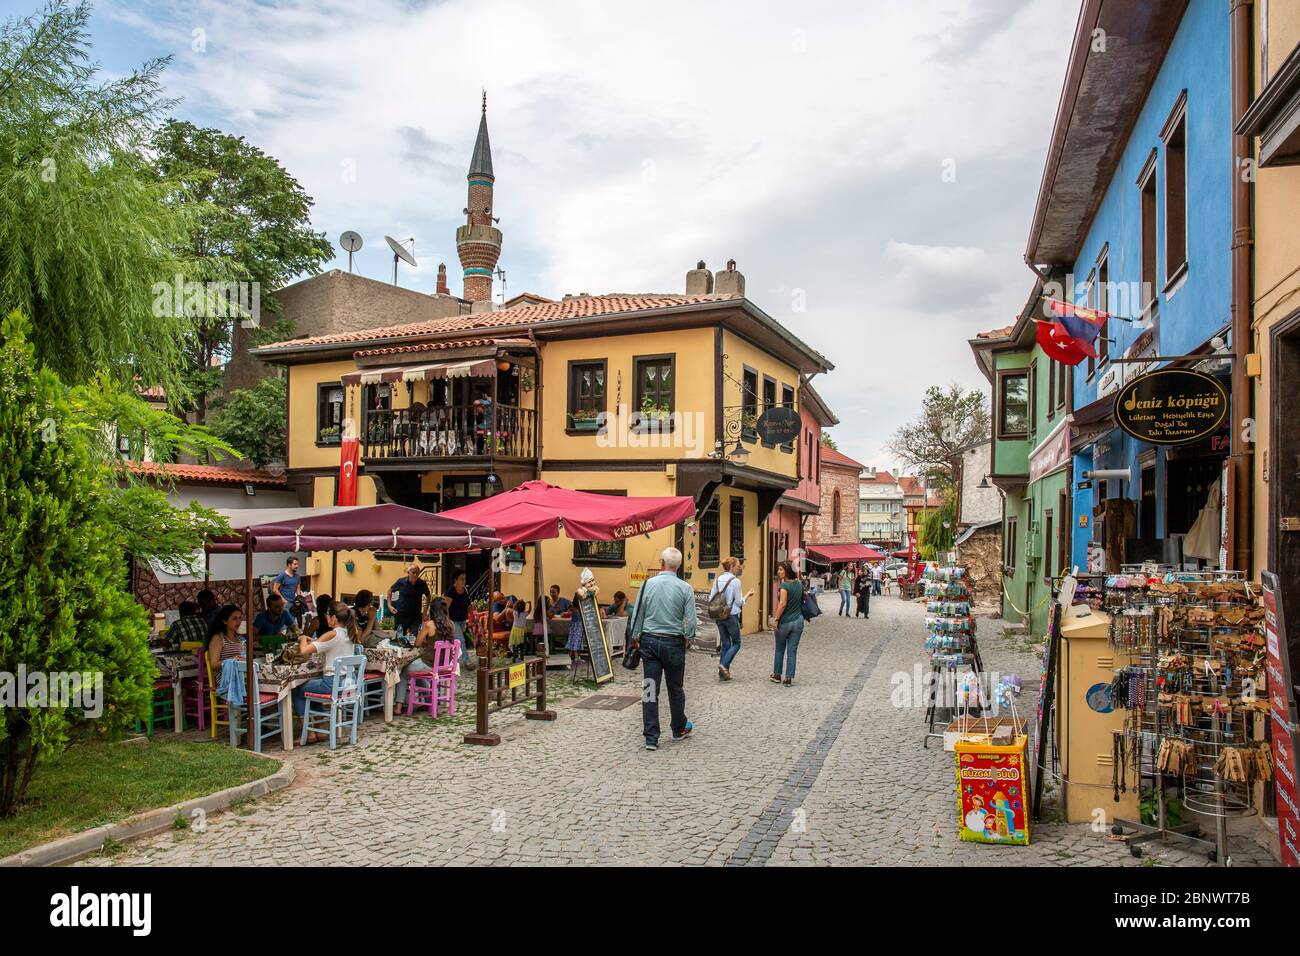 Eskisehir, Turkey - August 28, 2016: Tourists tour the streets of Orunpazarı district in Eskisehir on August 28, 2016. Stock Photo